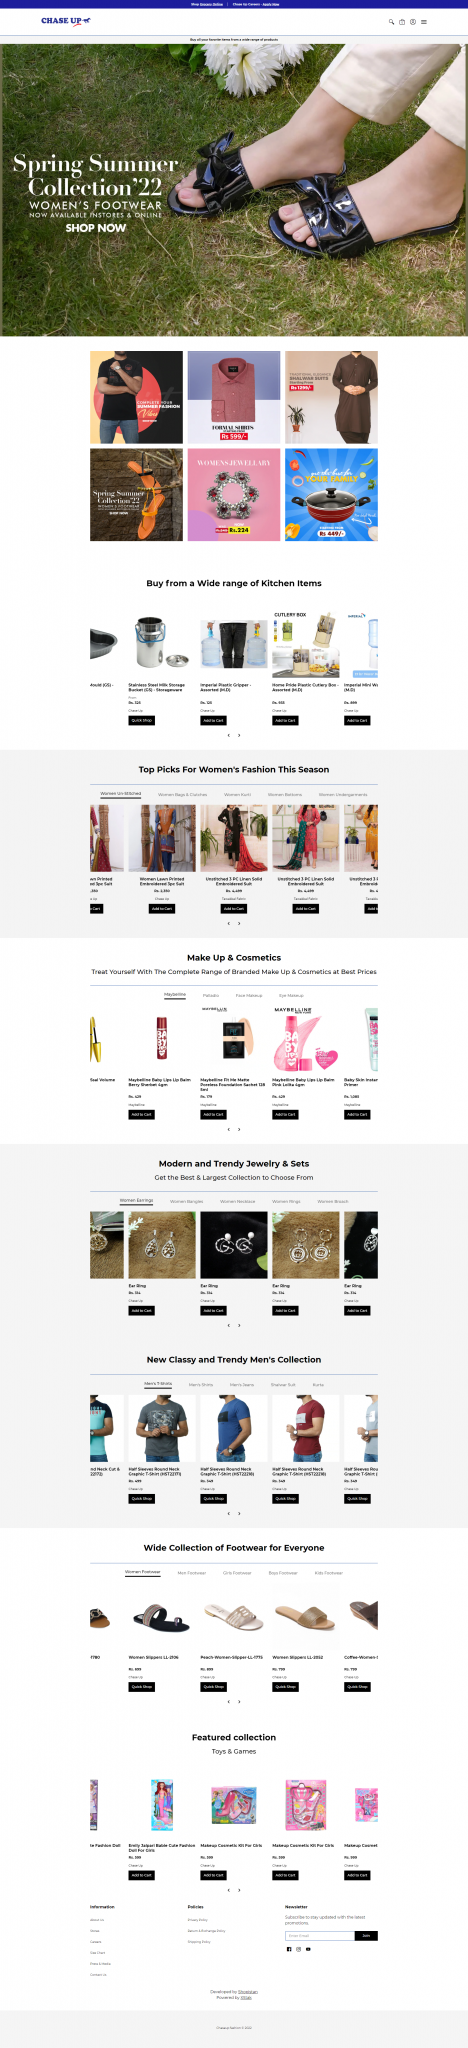 chaseupfashion shopify ecommerce online store site